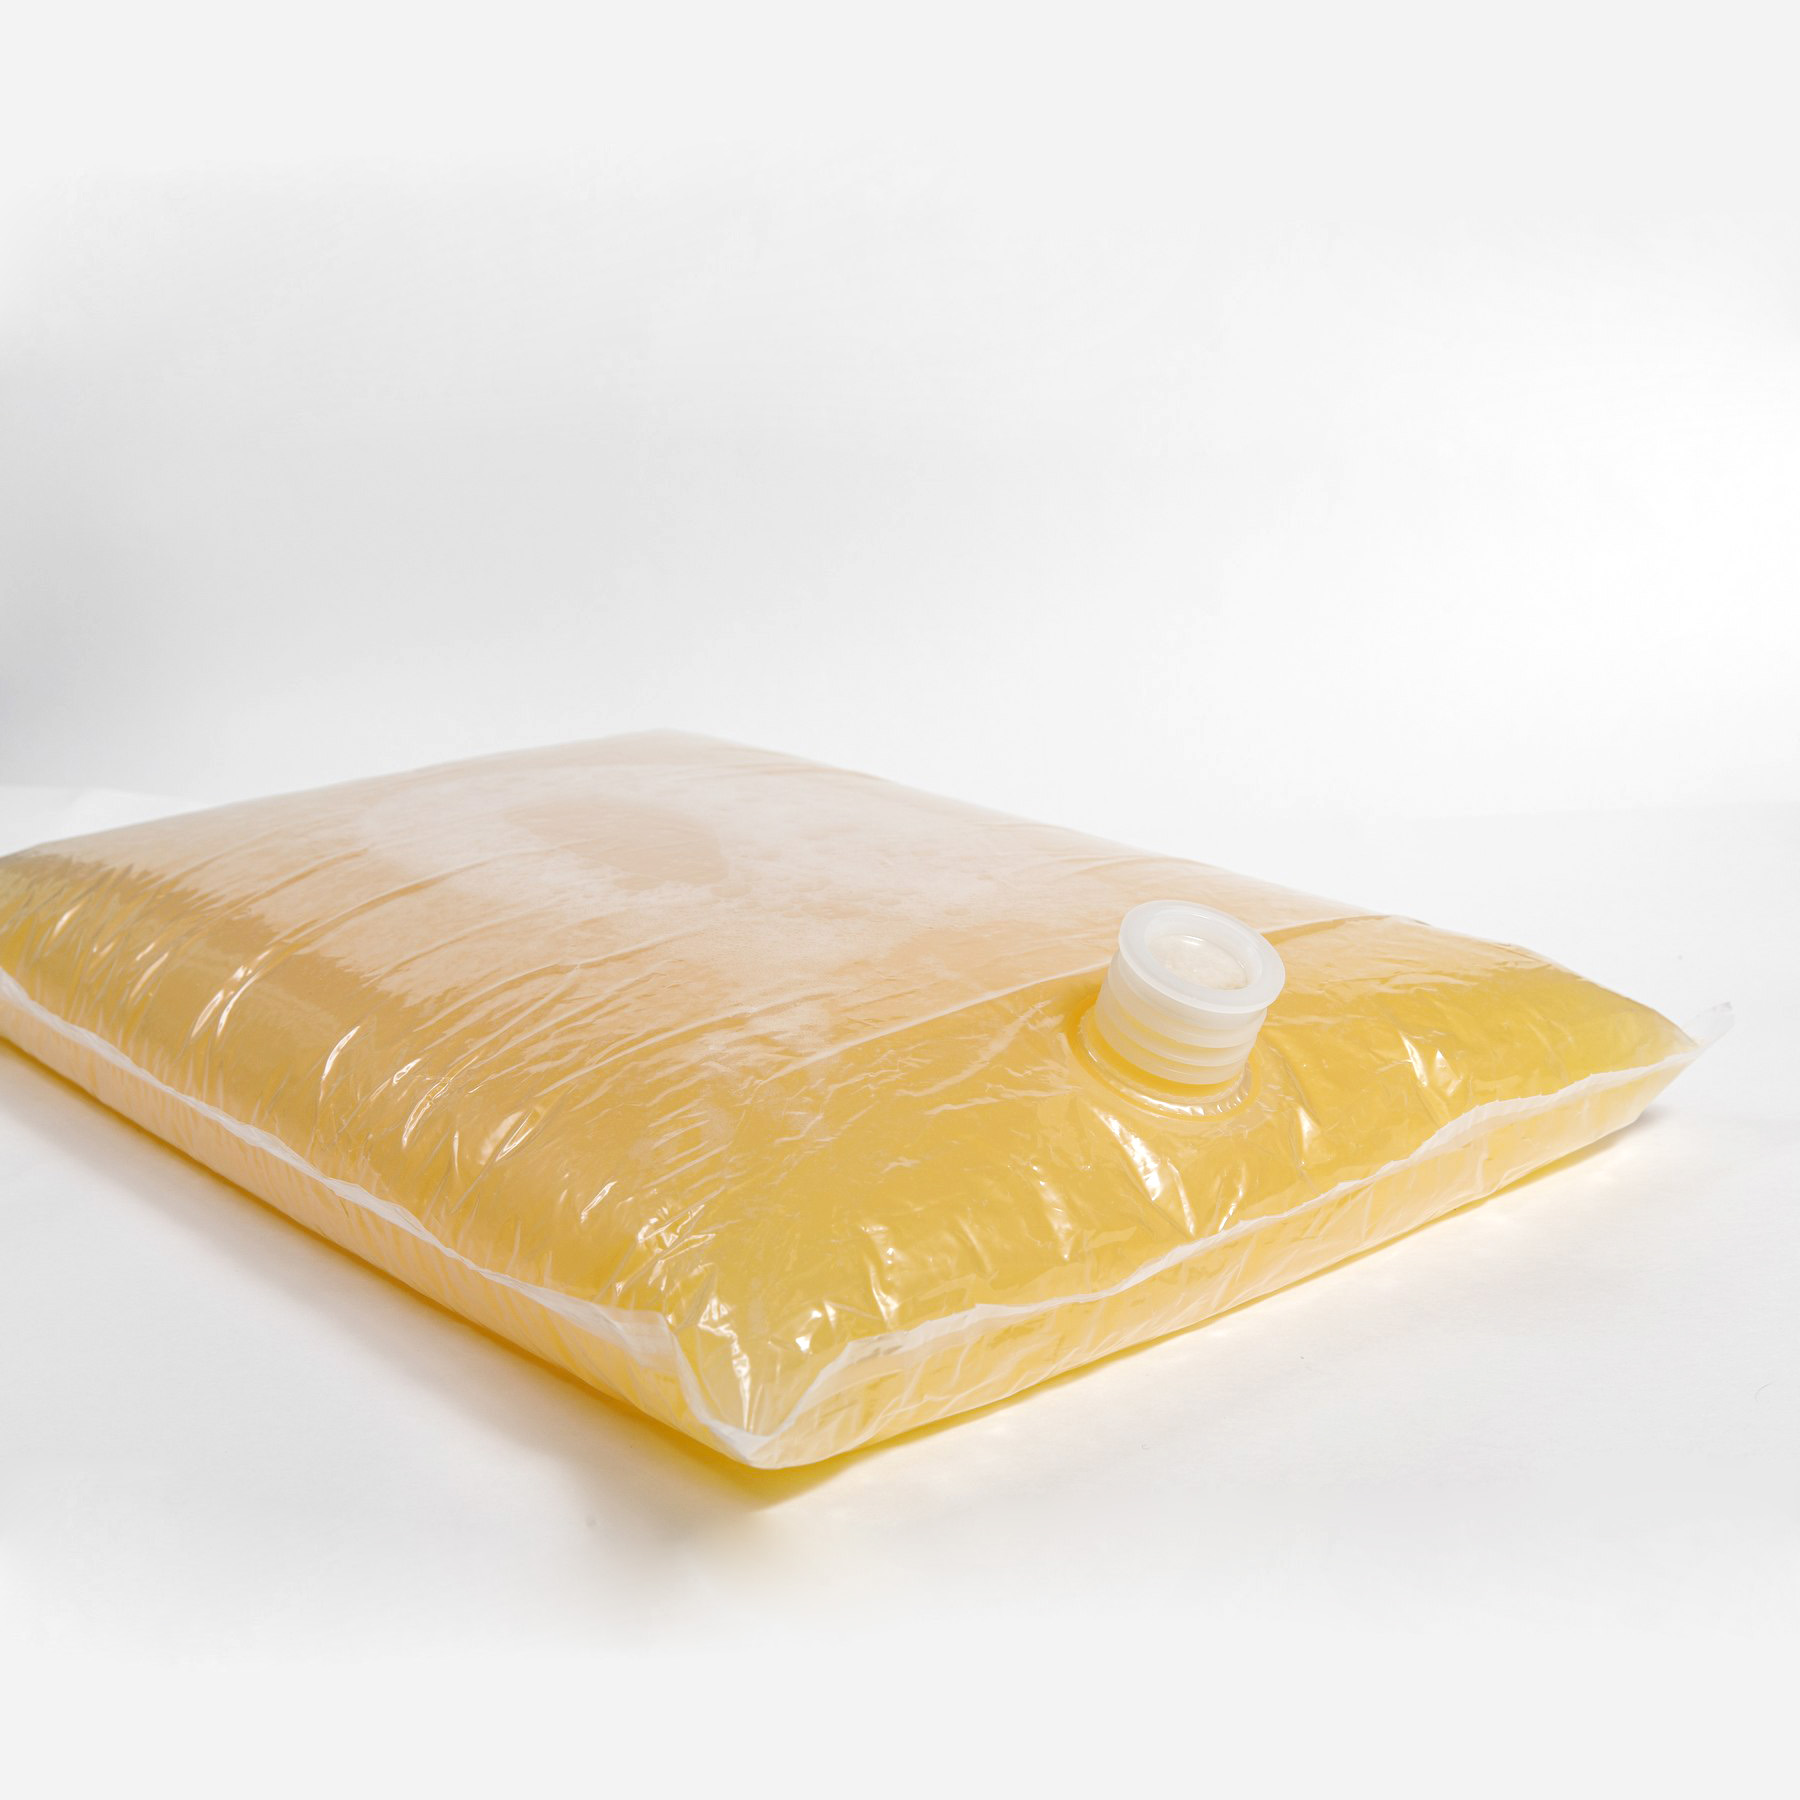 Bag in box for liquid egg packaging